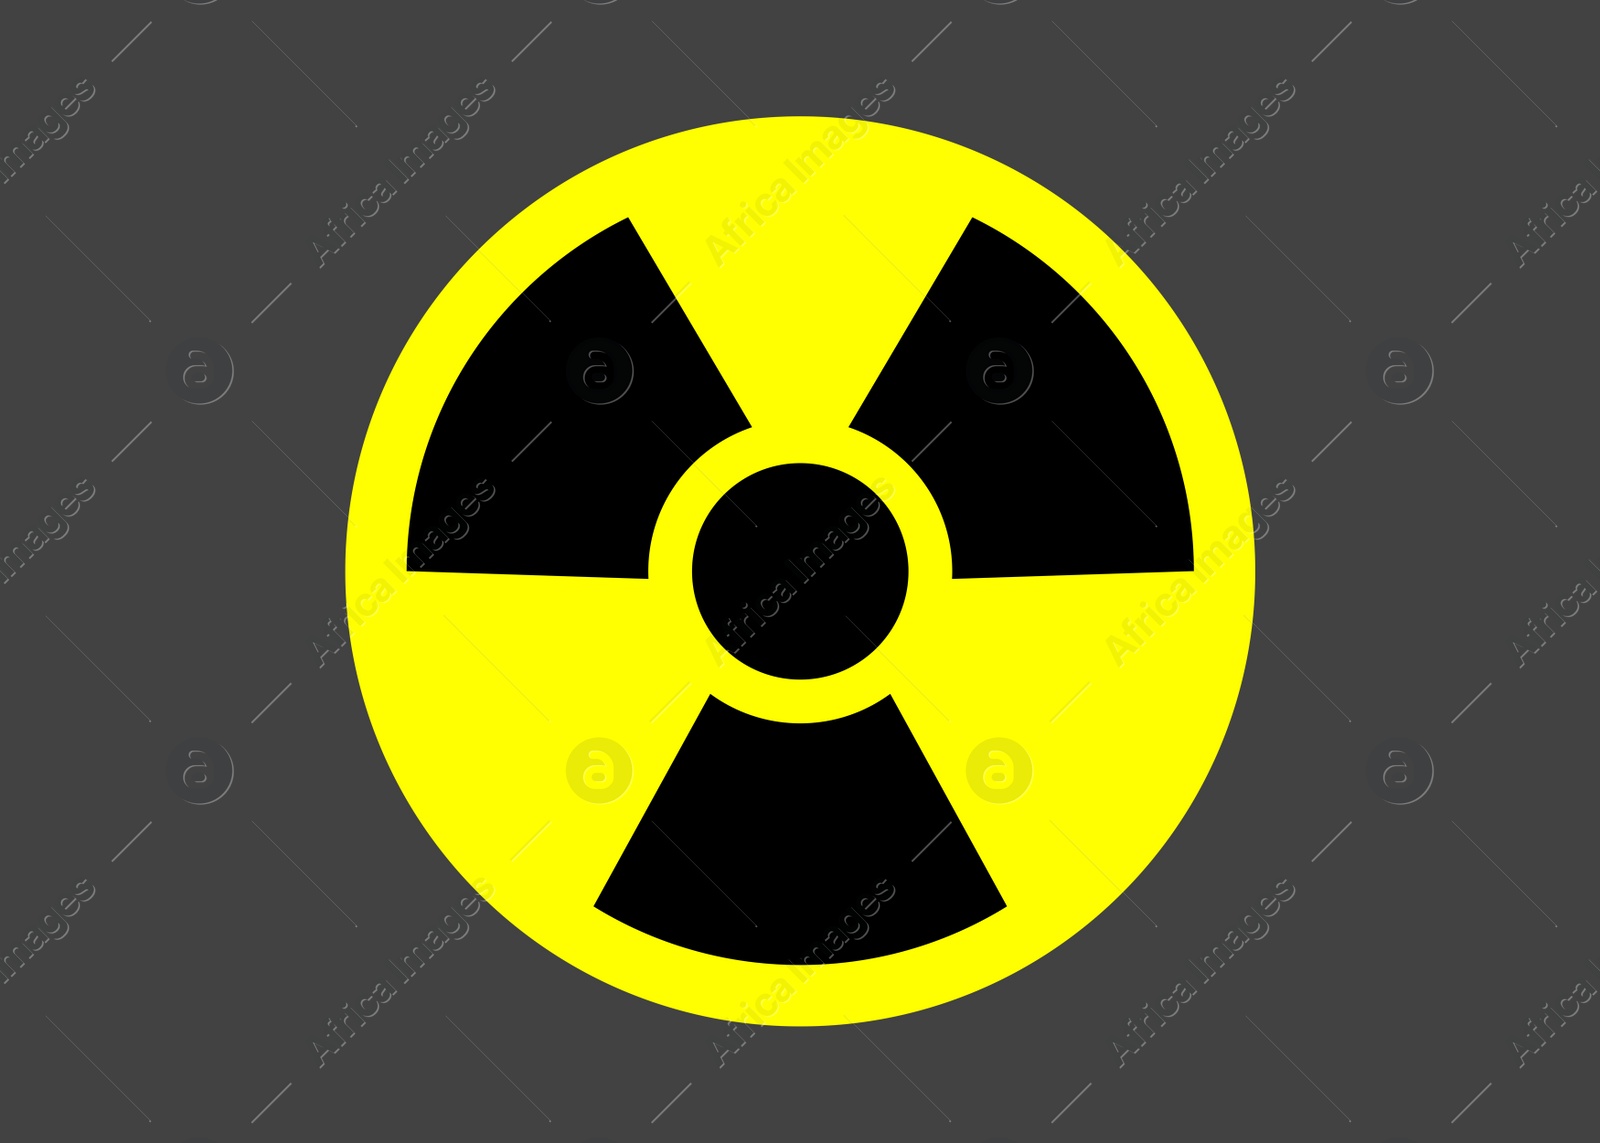 Illustration of Radioactive sign on grey background. Hazard symbol